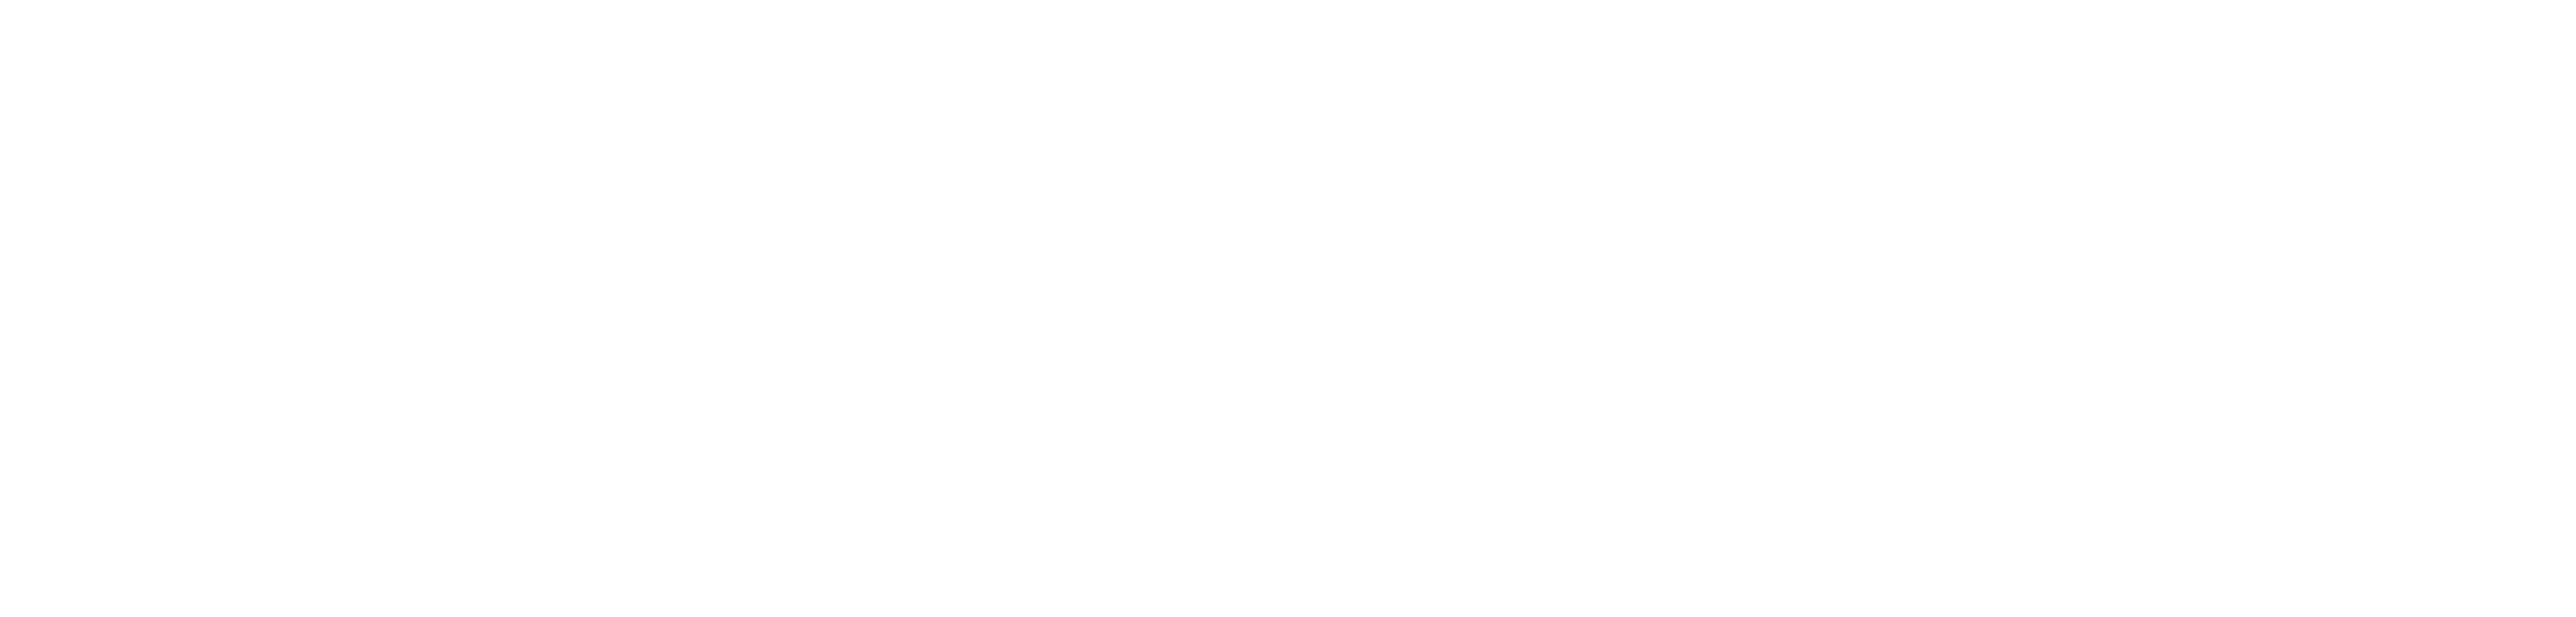 GamifyCon - Die große Gamification Konferenz